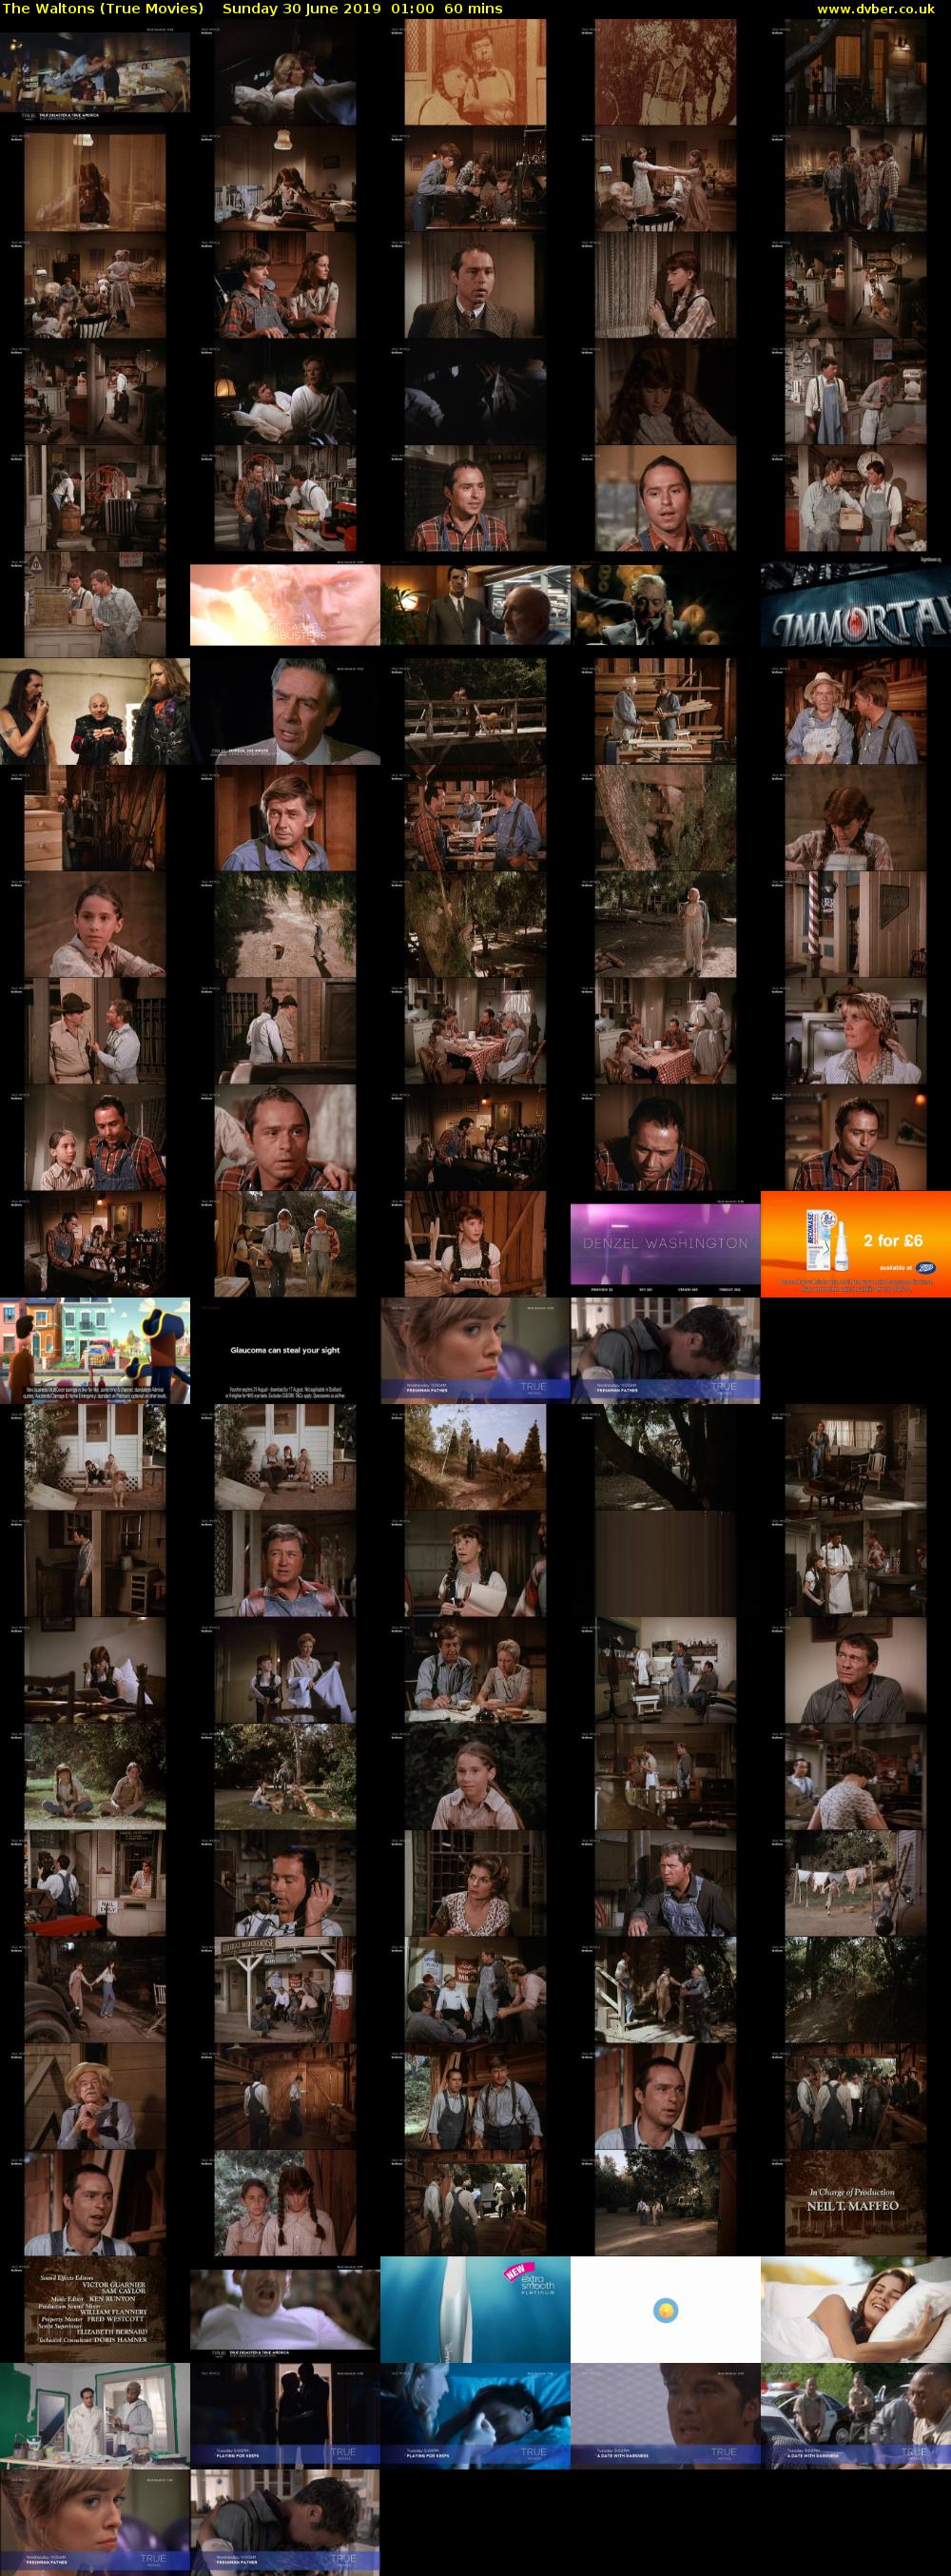 The Waltons (True Movies) Sunday 30 June 2019 01:00 - 02:00